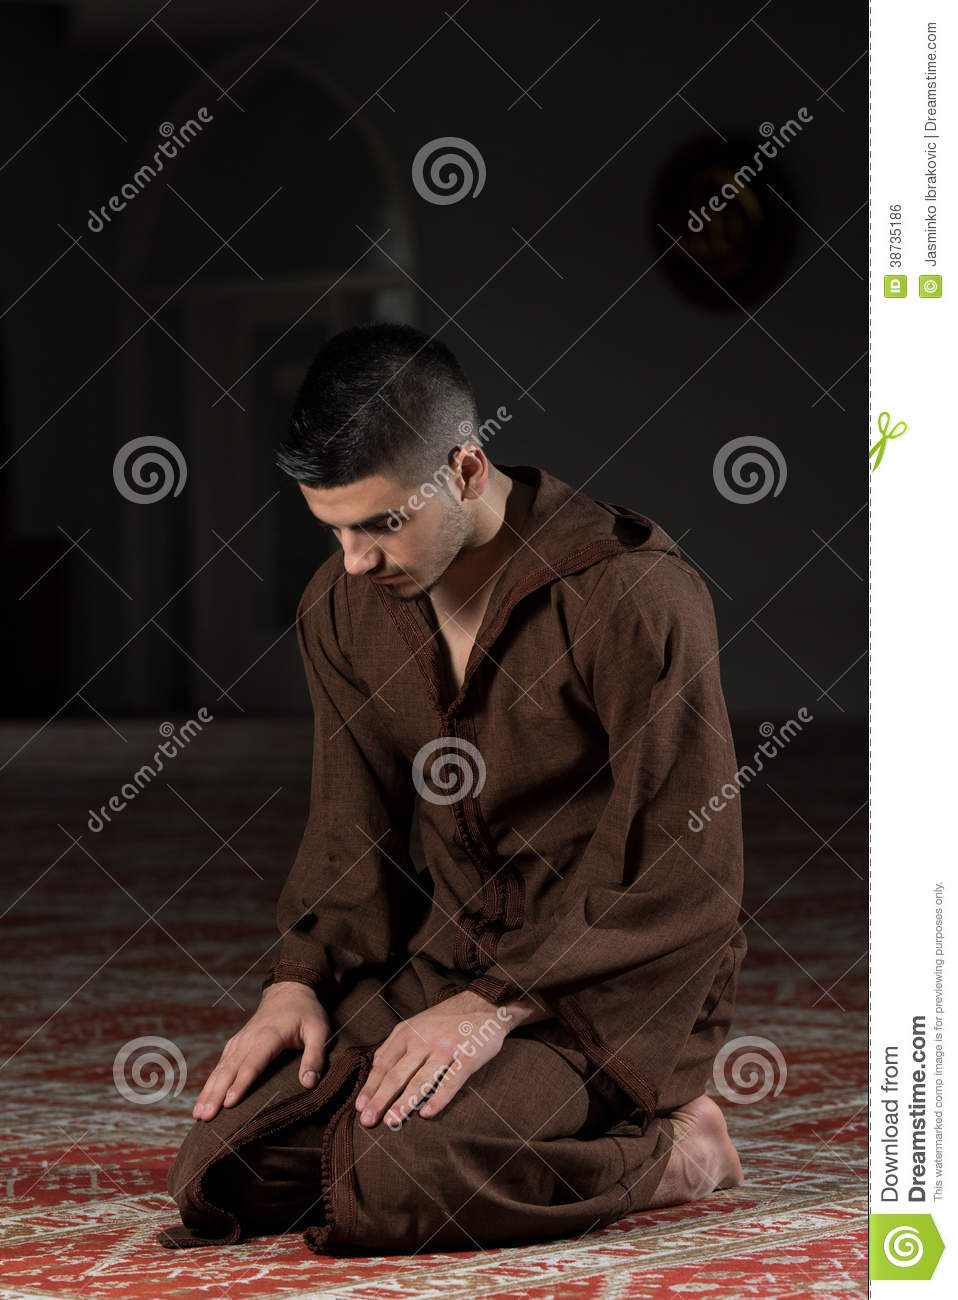 muslim-man-praying-mosque-young-making-traditional-prayer-to-god-wearing-traditional-cap-djellaba-38735186